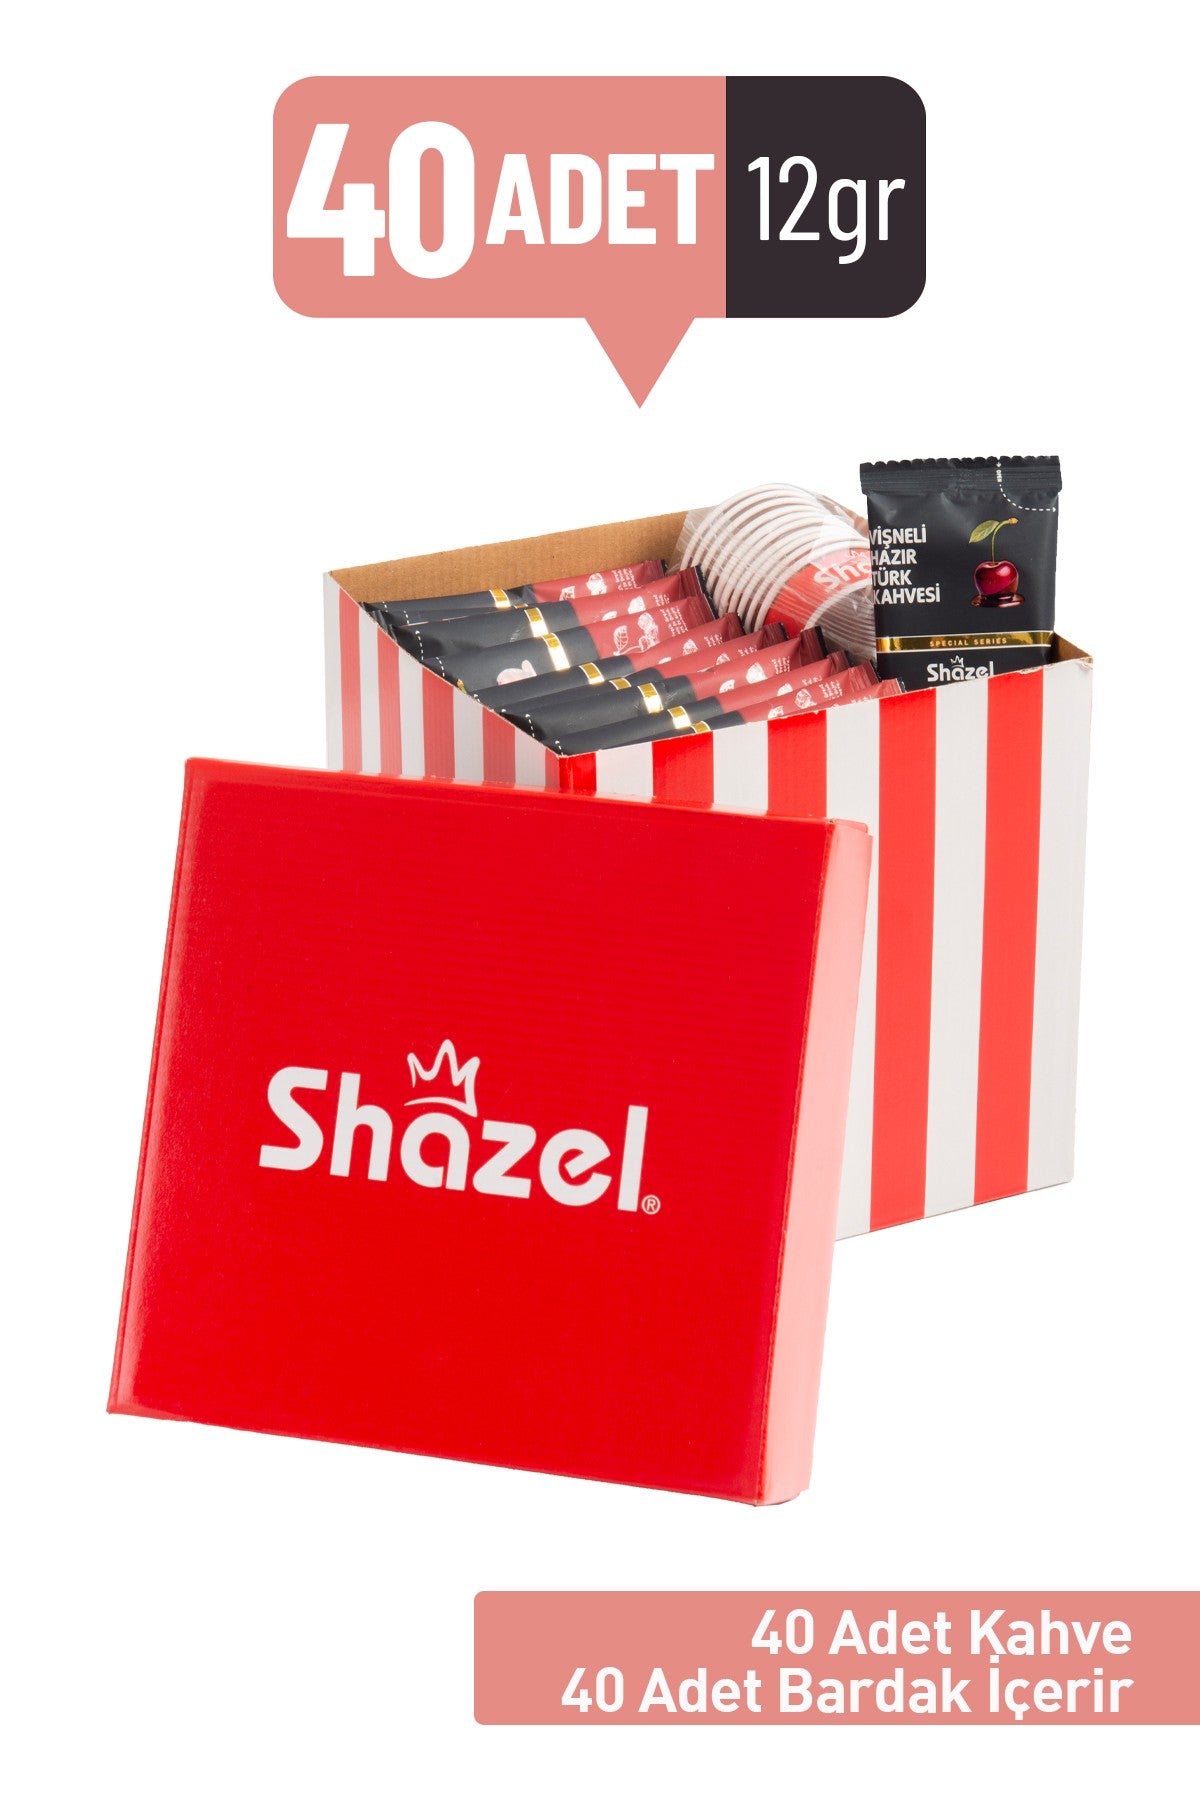 Shazel cherry Gift Office Set 12G x 40Pcs (Flavored)